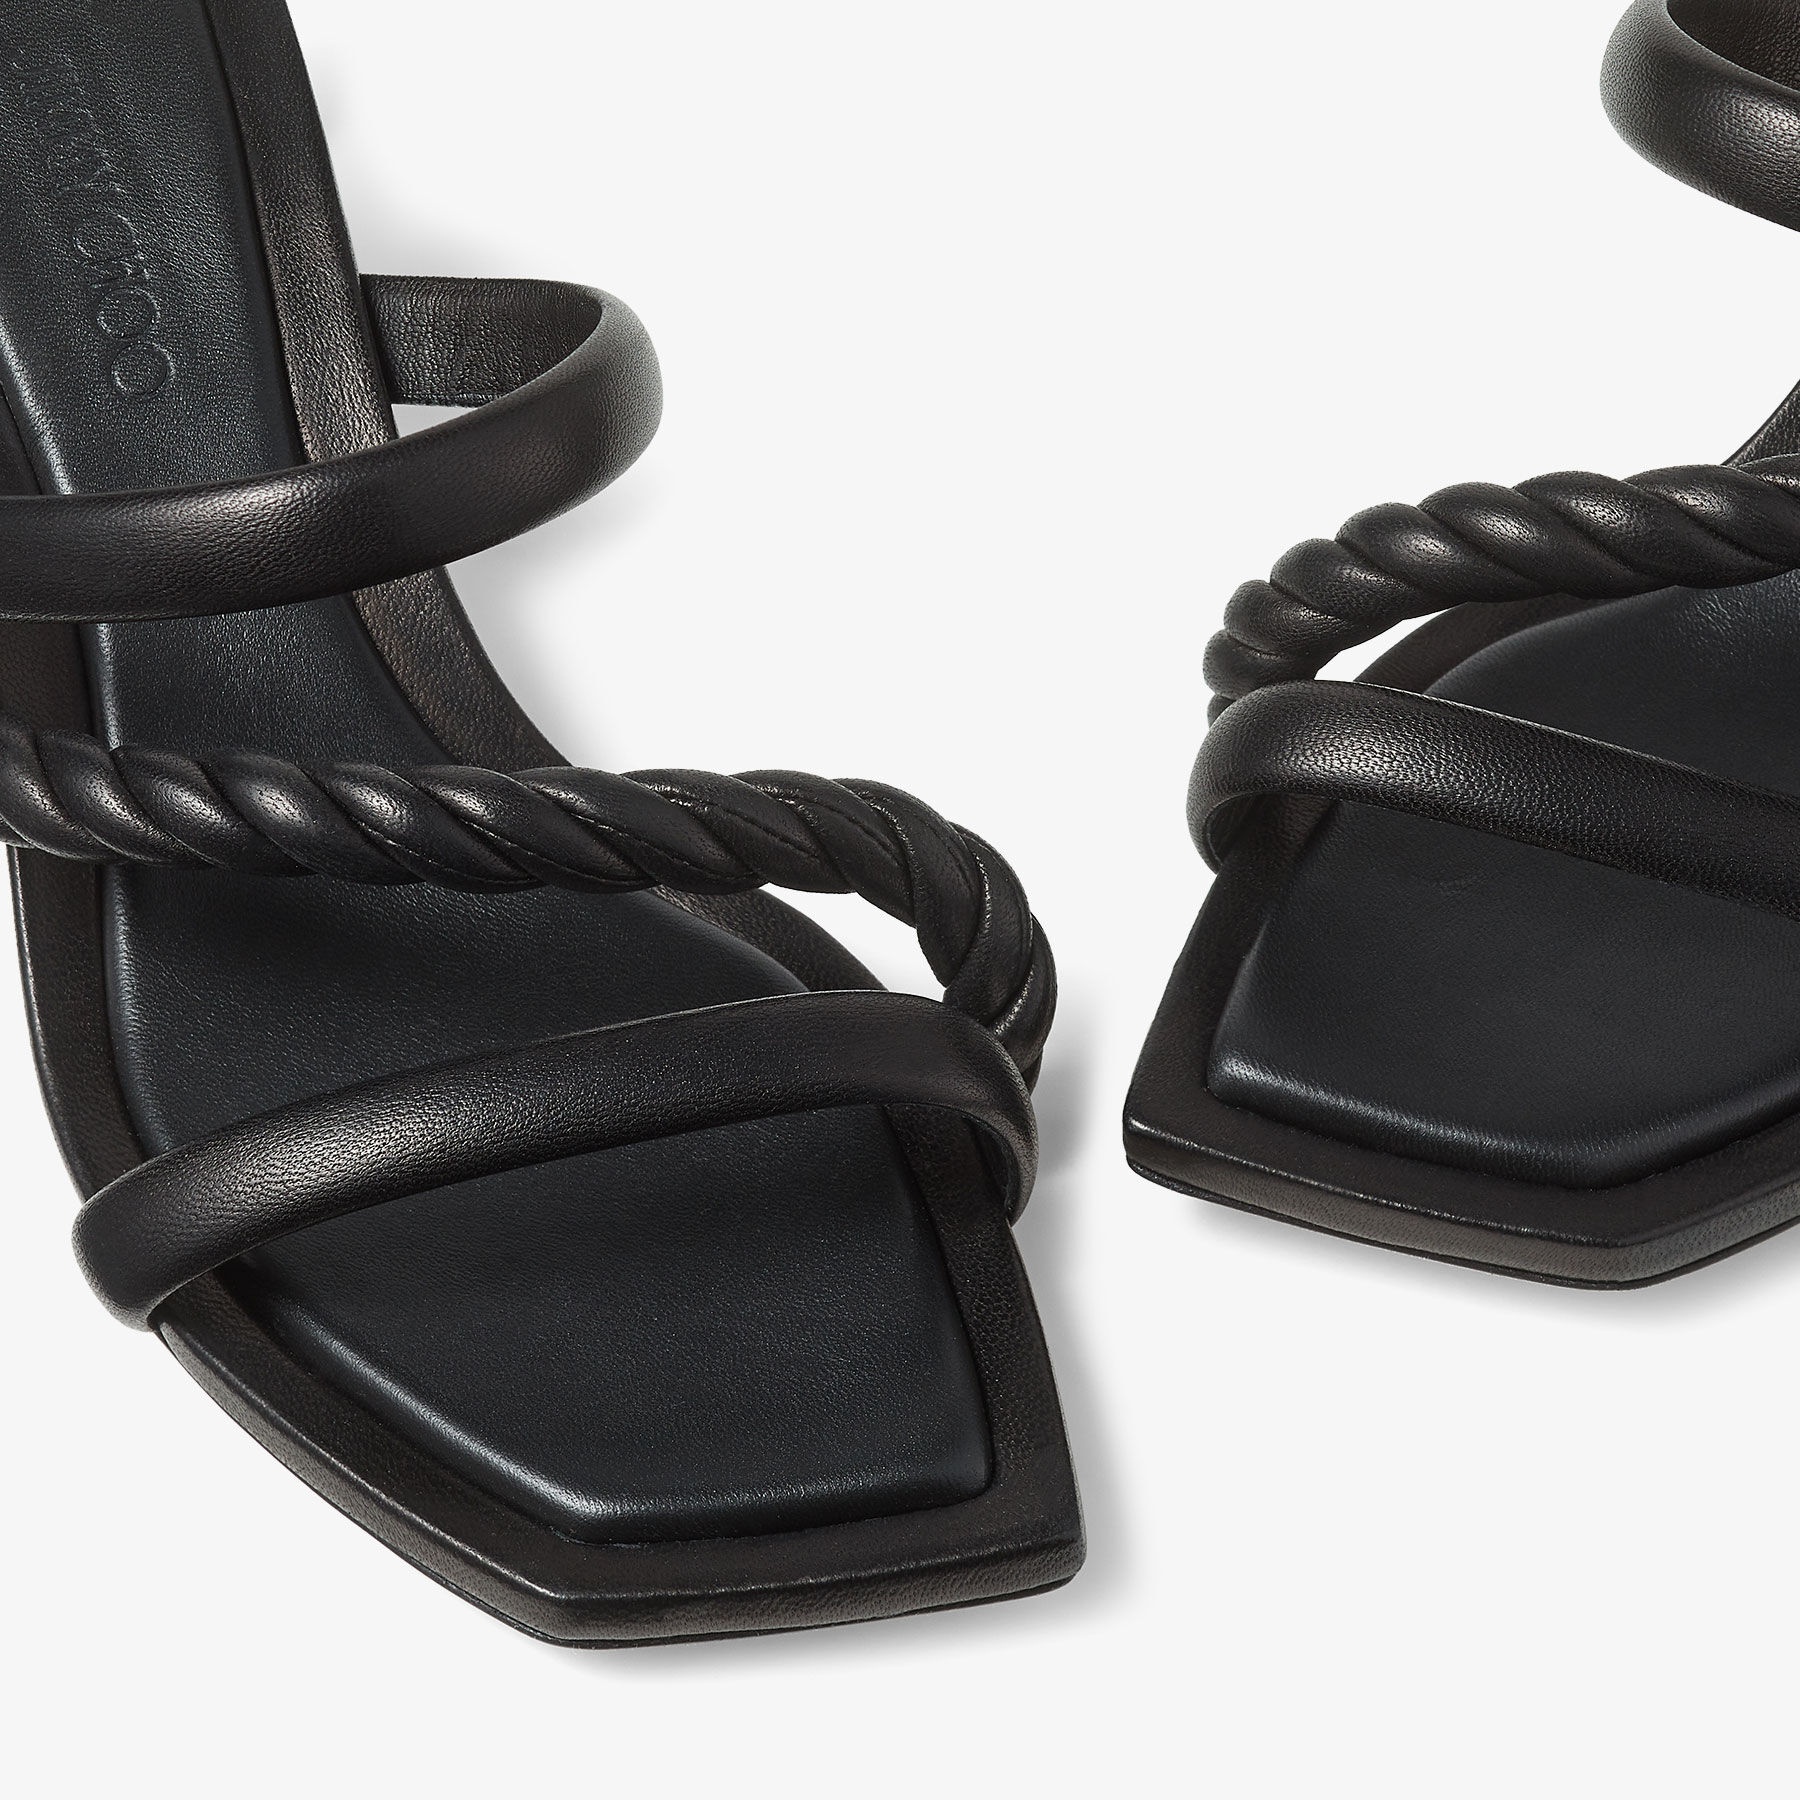 Diosa 50
Black Leather Sandals - 4